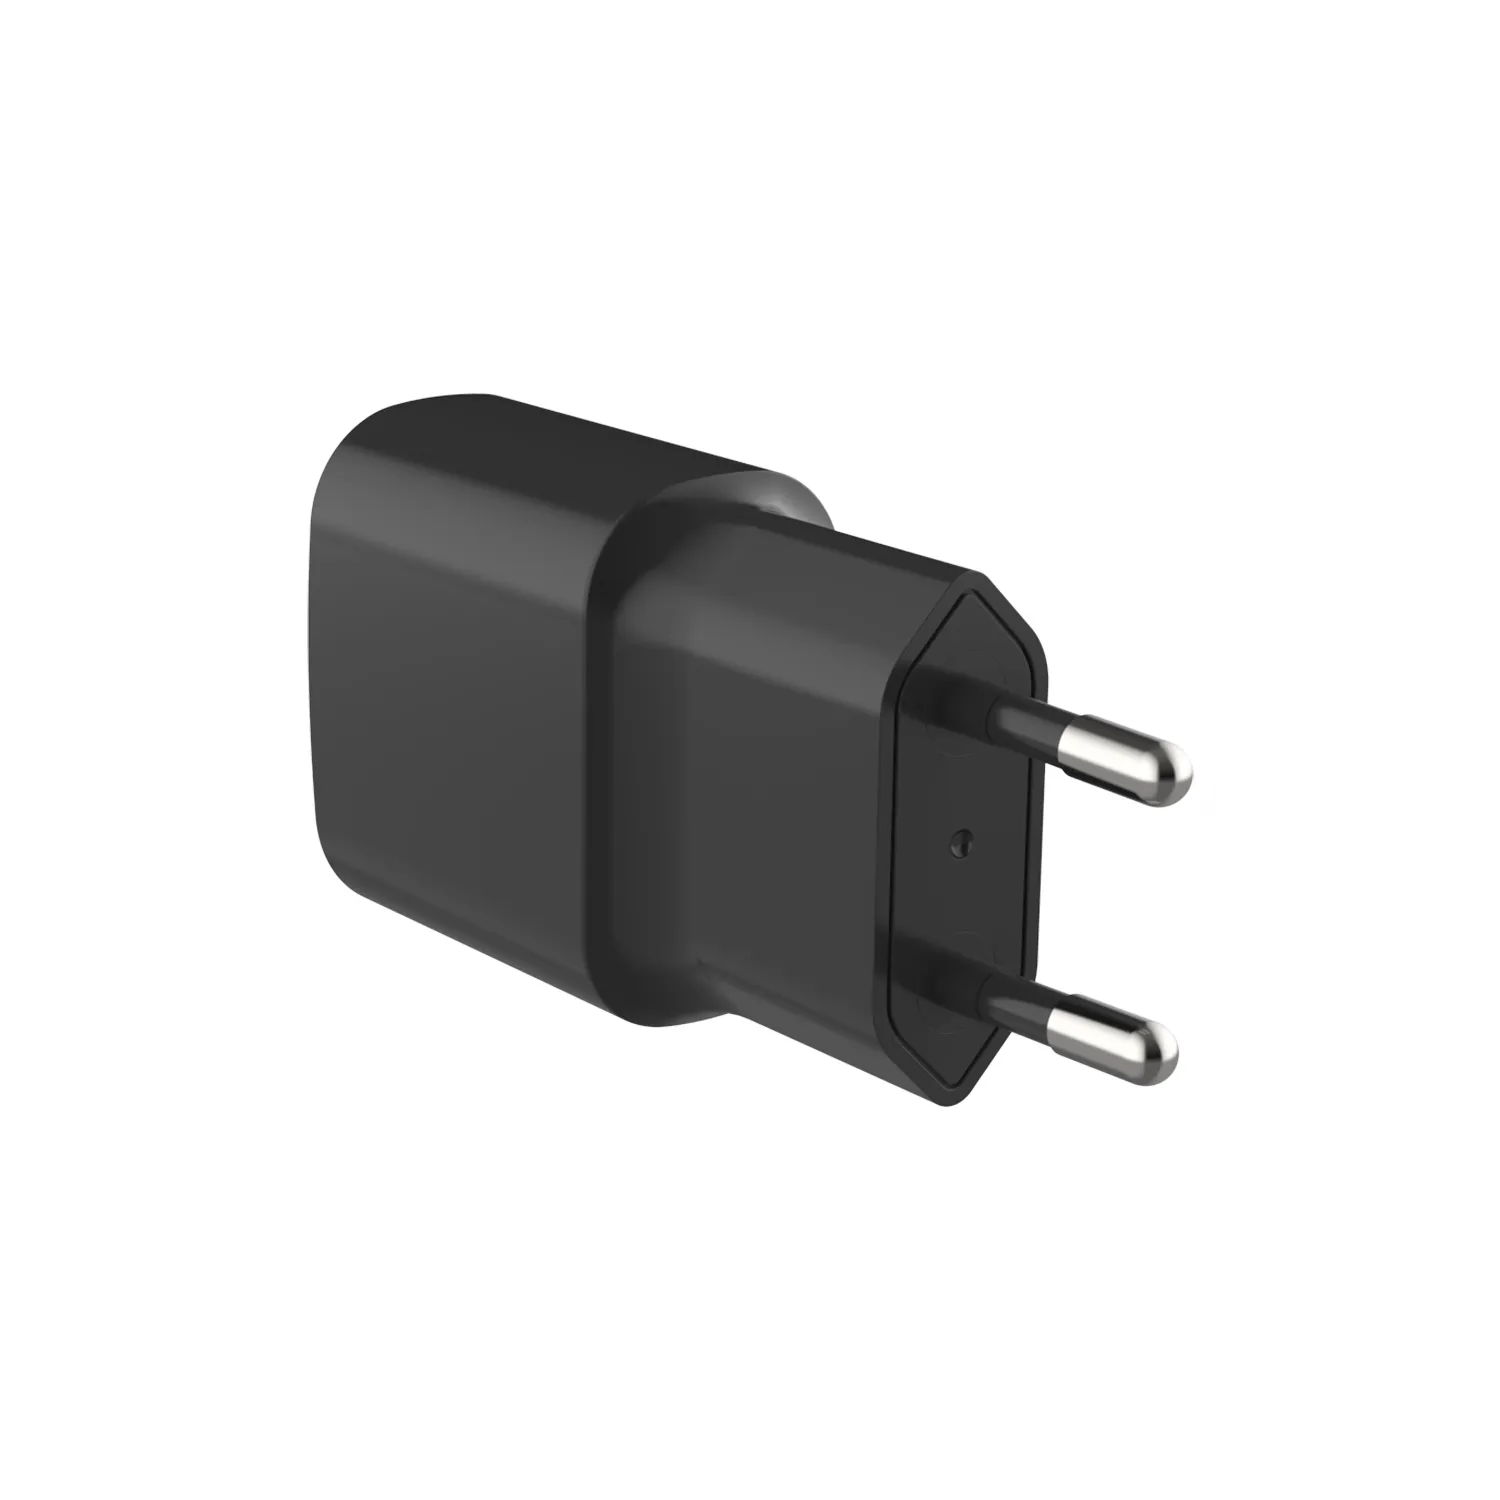 International Power Adapter, Ceptics World Travel USB Type C QC 3.0 18W PD Plug Adaptor Kit - 3 USB Ports Wall Charger